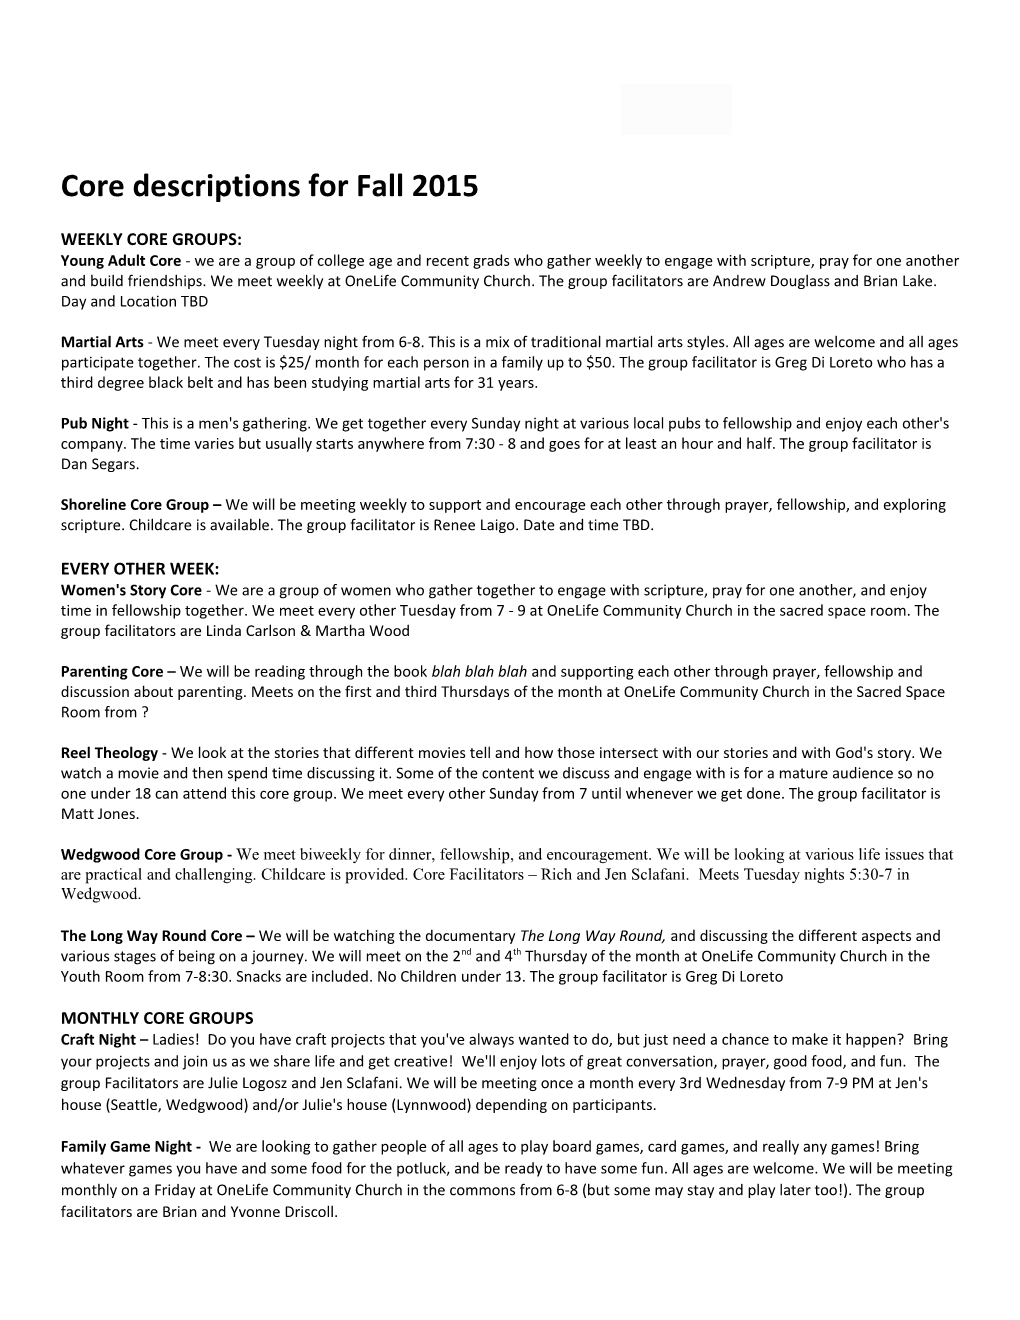 Core Descriptions for Fall 2015Hjkhjk